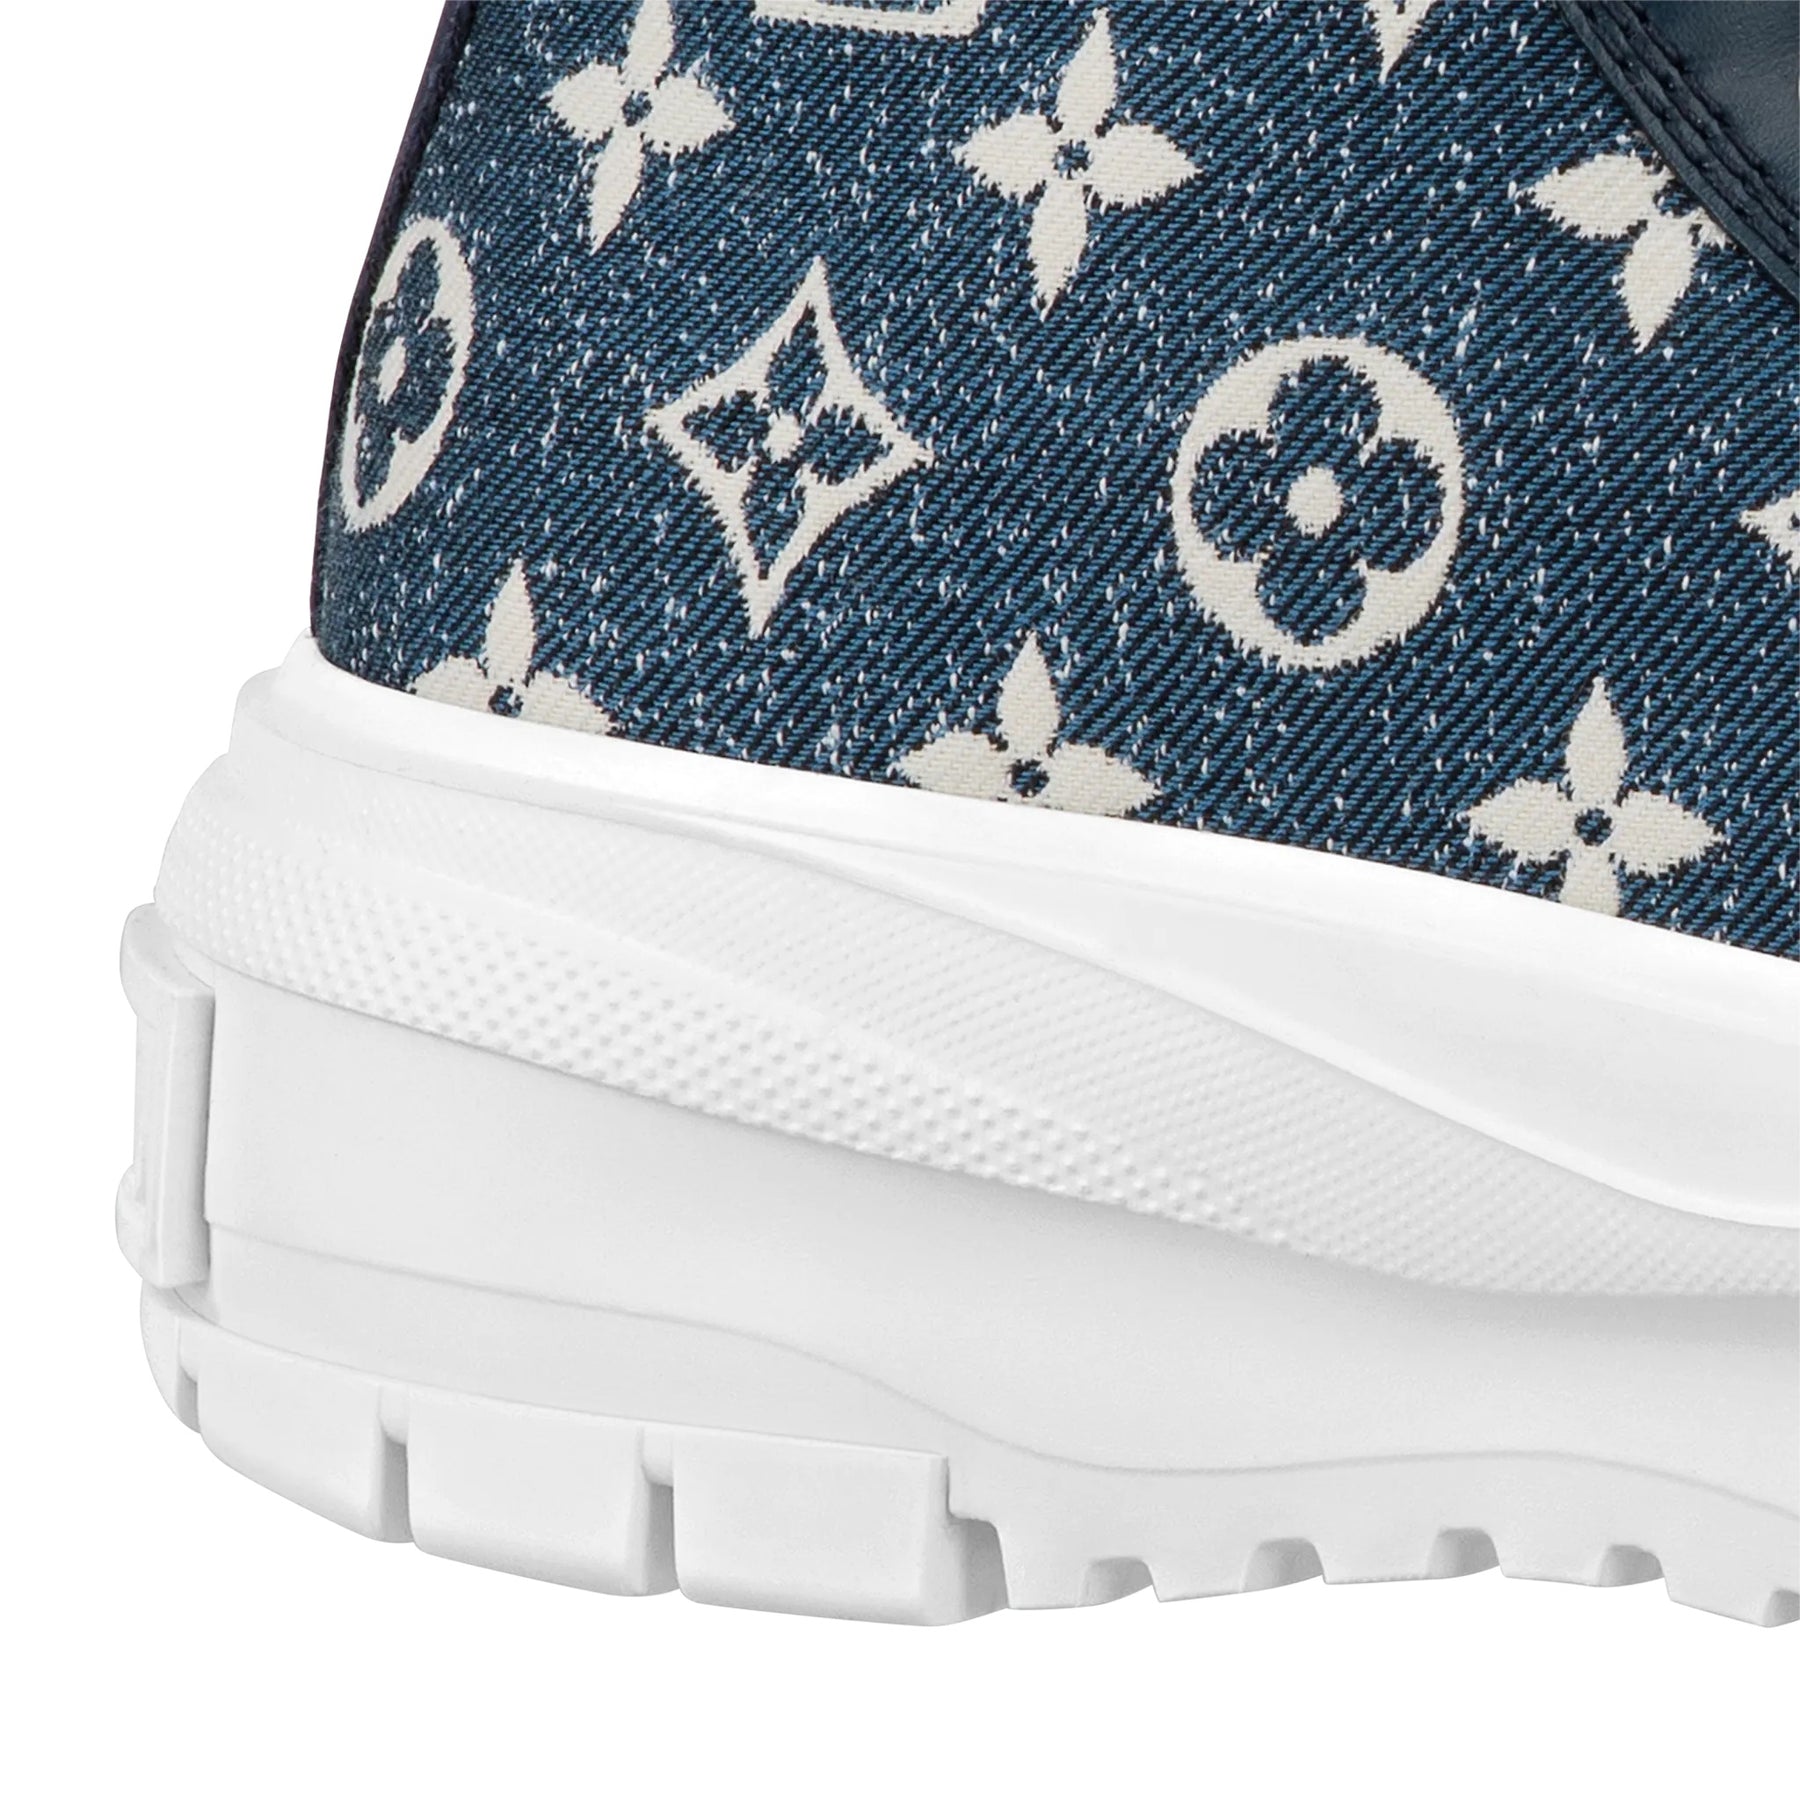 Superb Brands Louis Vuitton LV Squad Sneaker Boot 1A9S10 - https